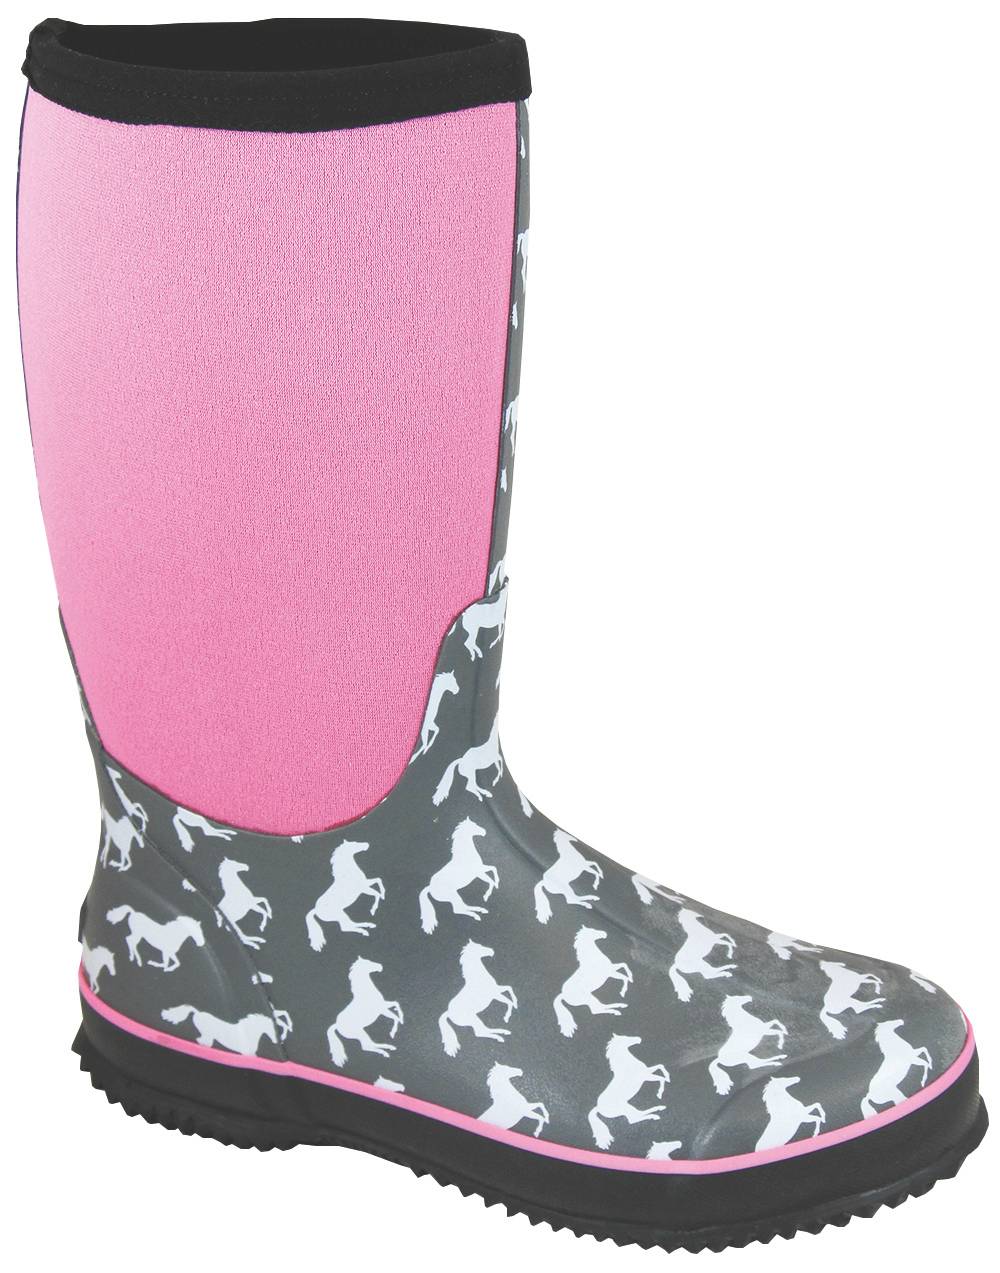 Smoky Mountain Ladies Horses Amphibian Boots - Gray/Pink